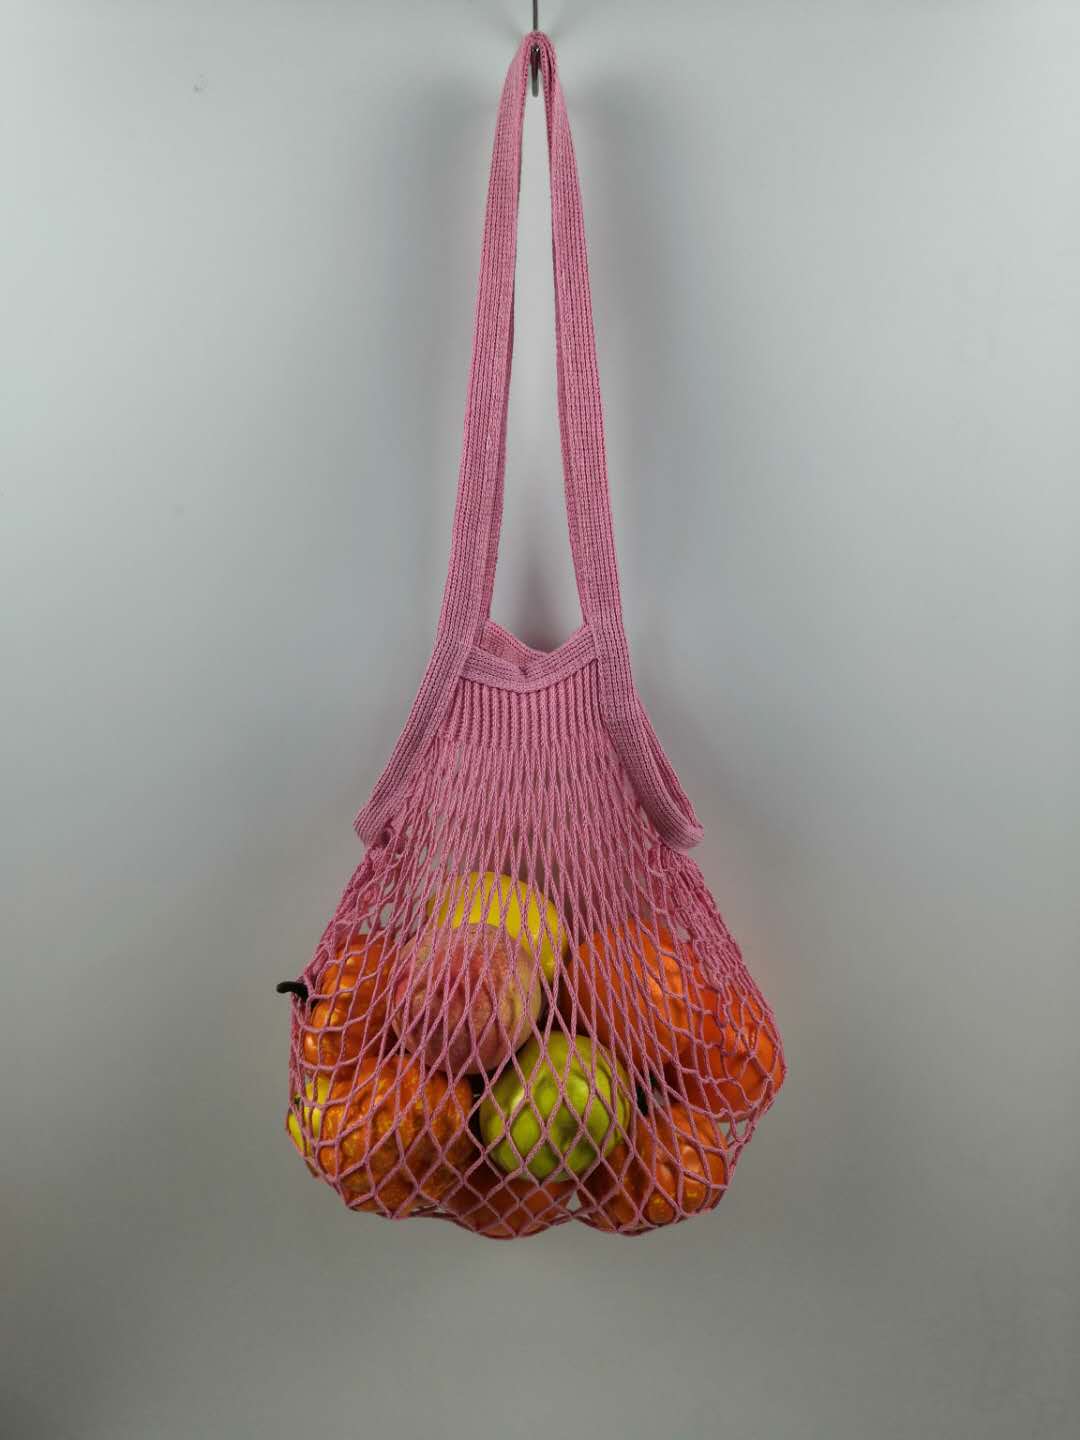 French long handle net bag